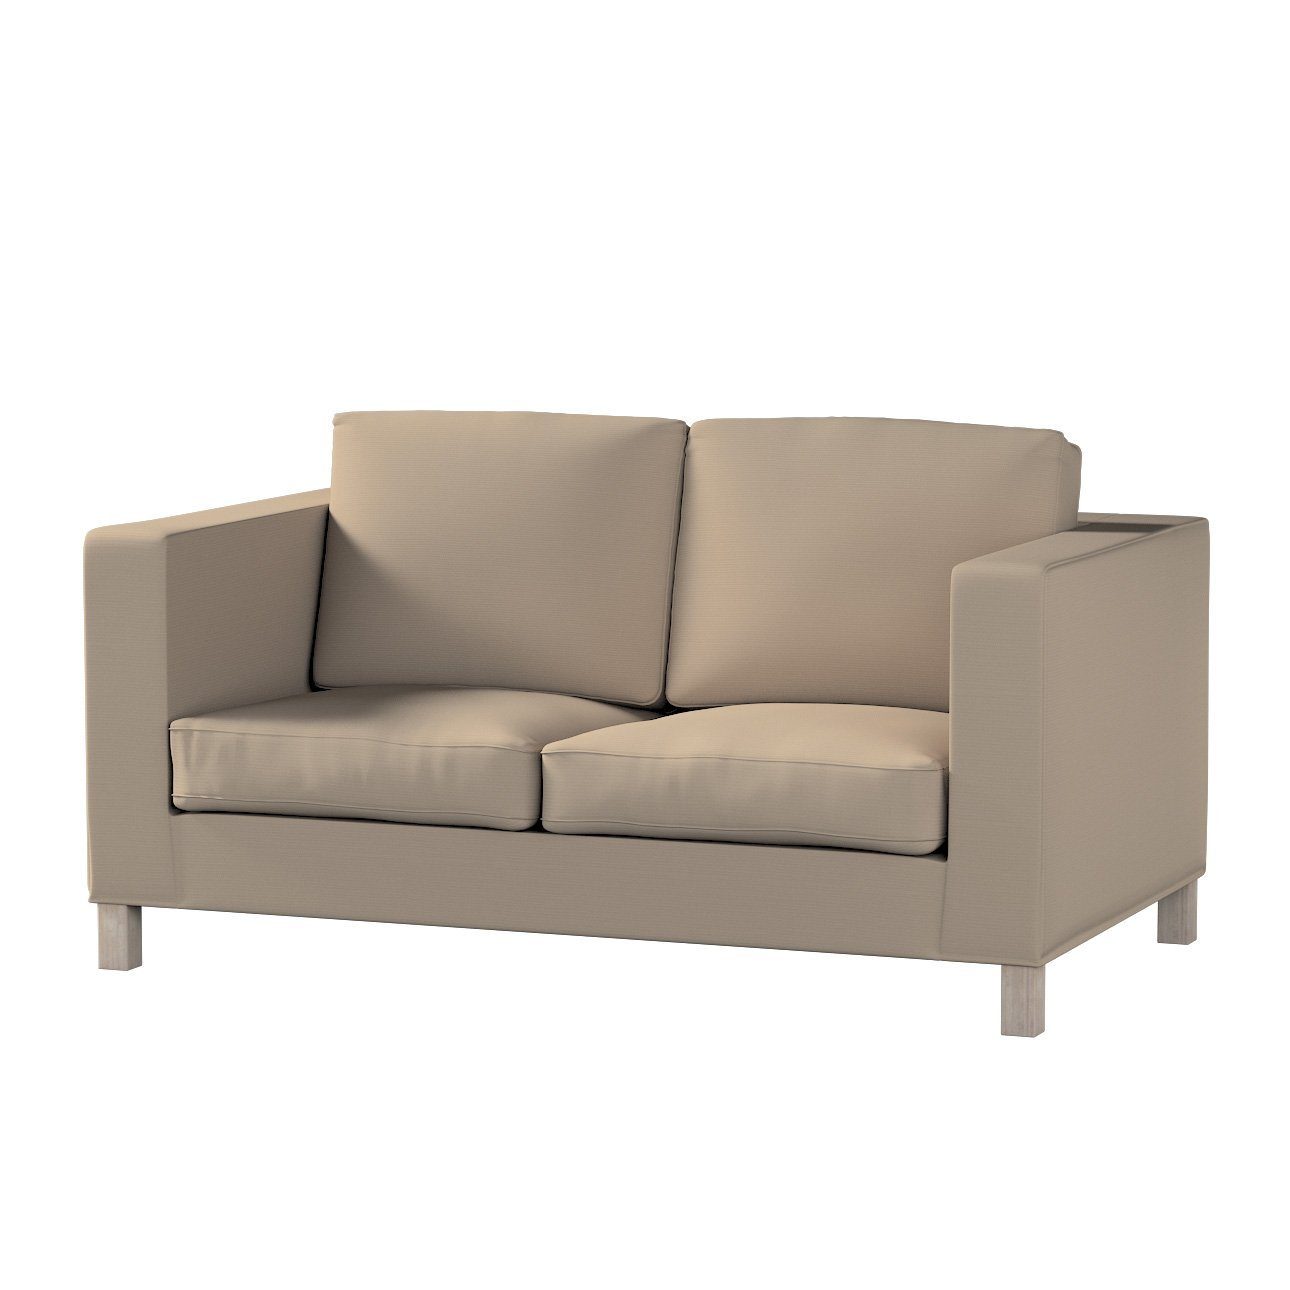 Sofahusse Karlanda 2-Sitzer Sofa nicht ausklappbar kurz, Cotton Panama, Dekoria grau-braun | Sofahussen